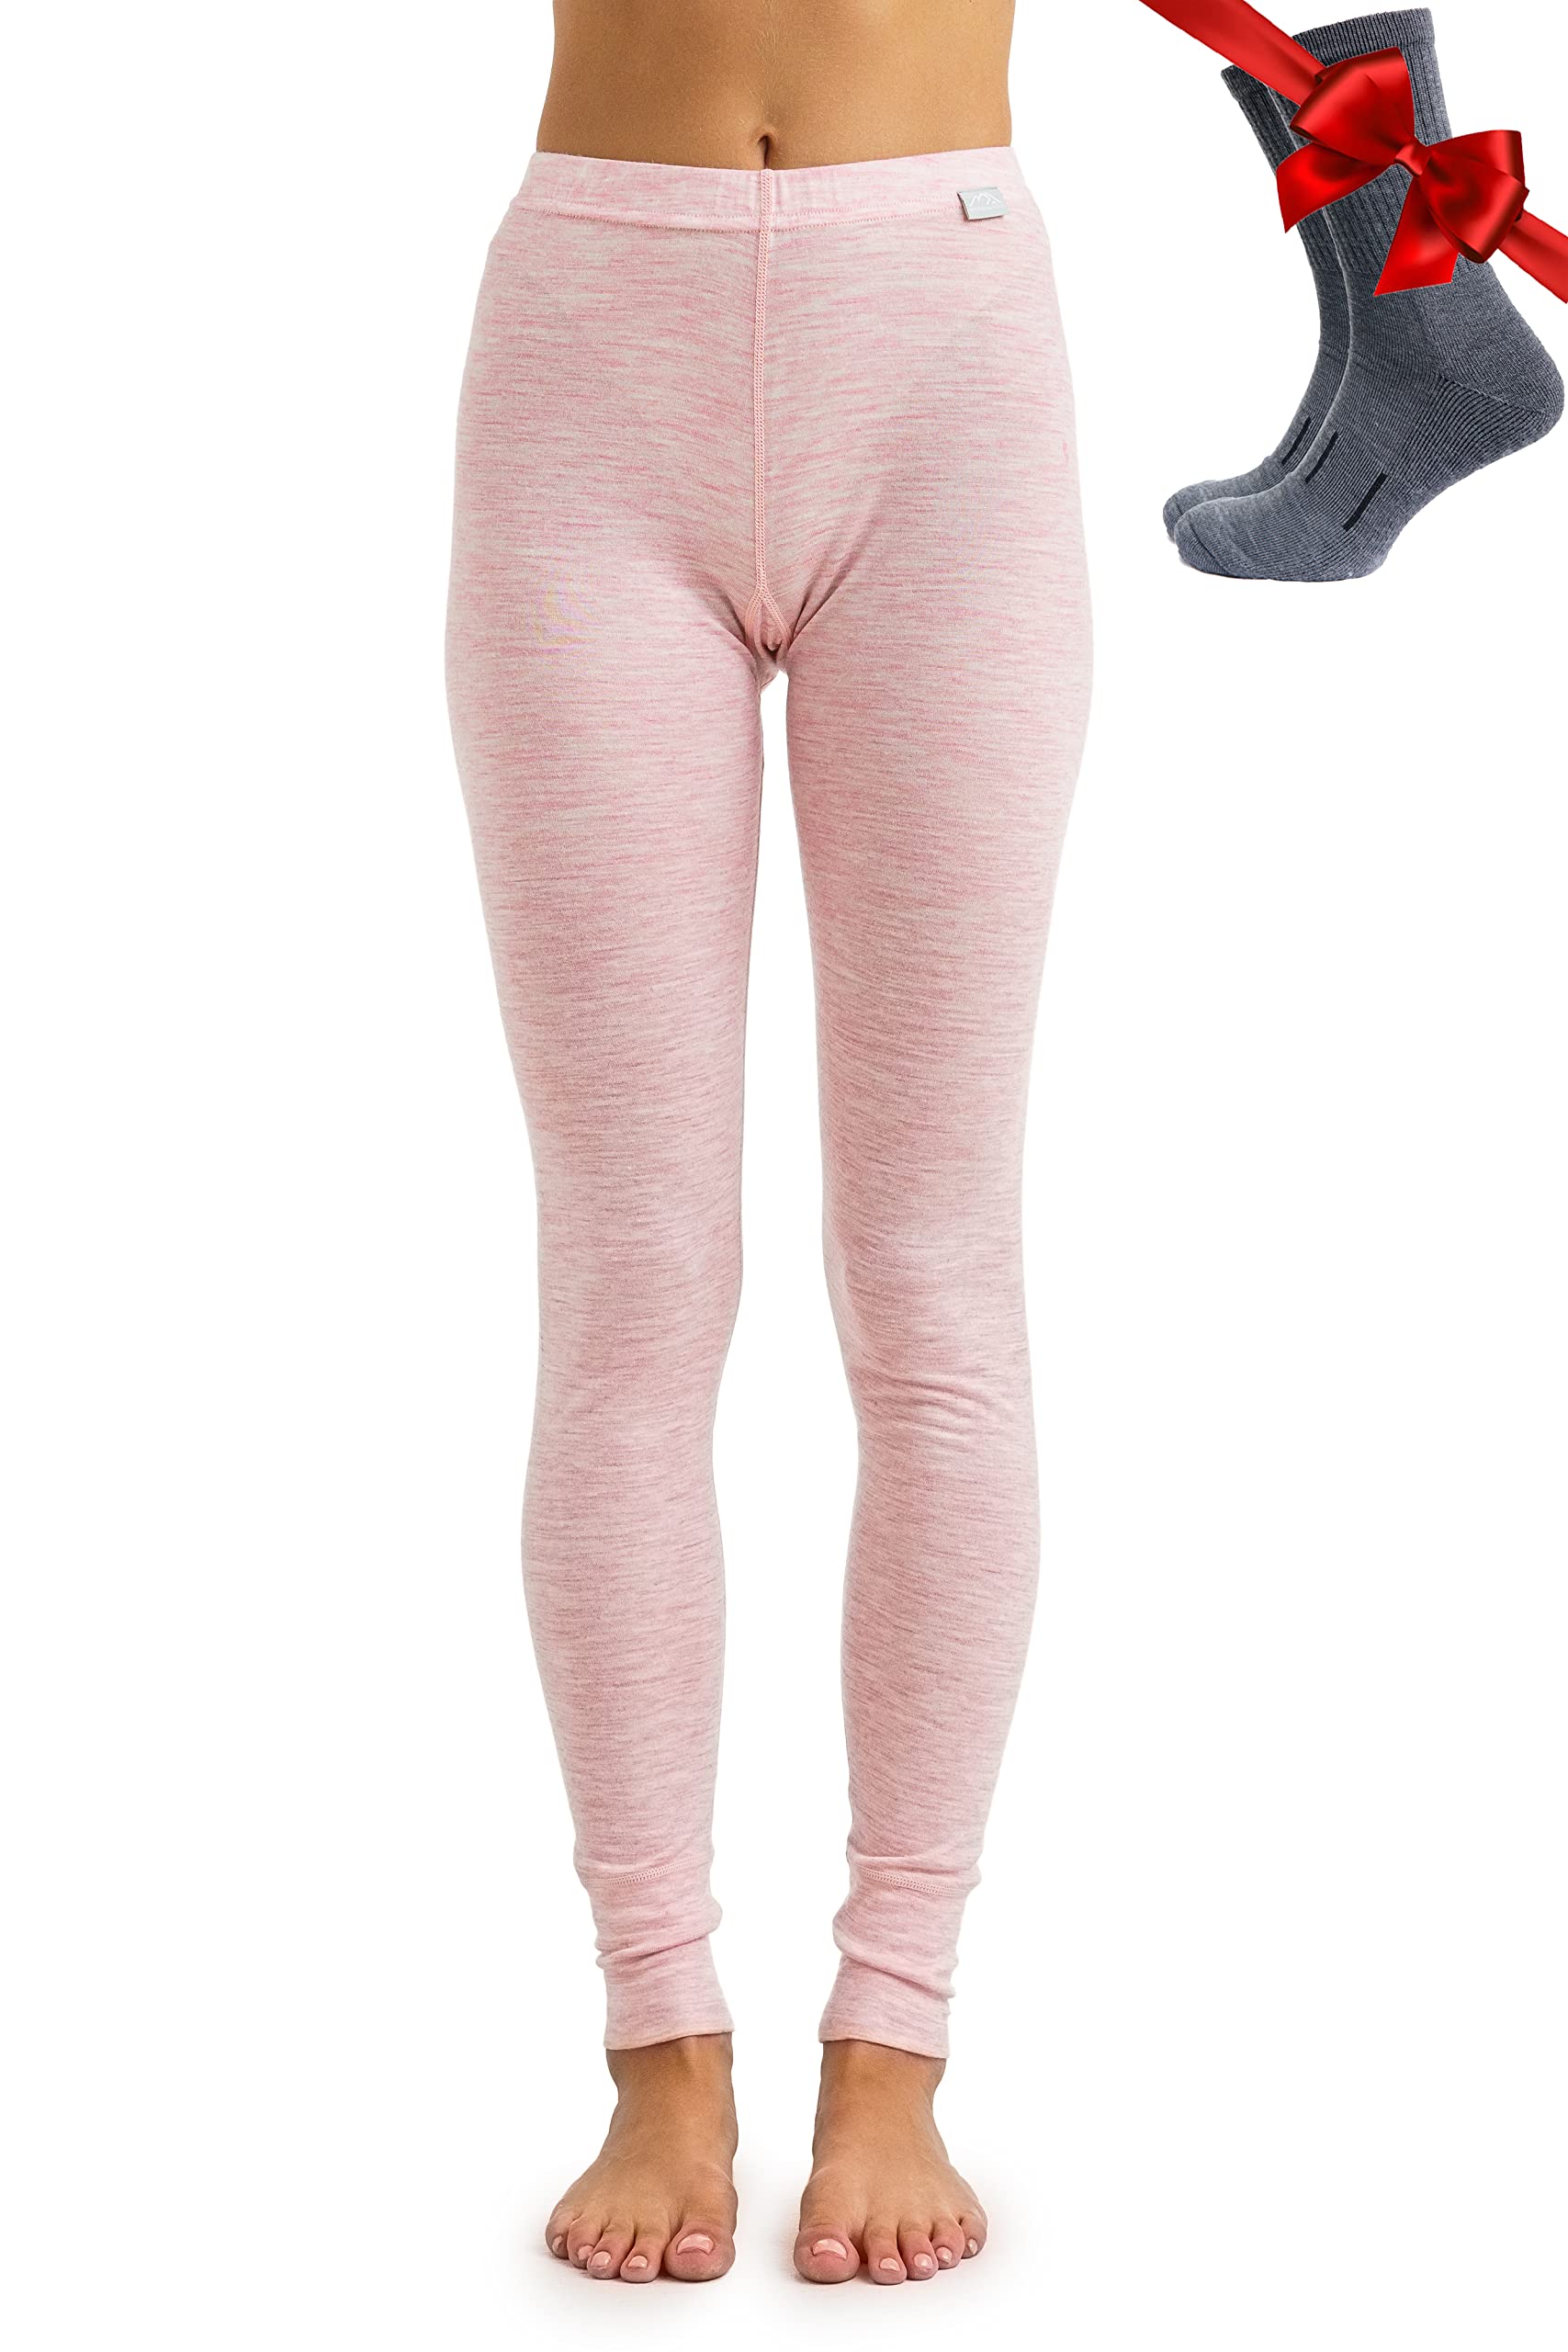 Buy Amante Rose Pink Mid Rise Thermal Leggings for Women Online @ Tata CLiQ-megaelearning.vn